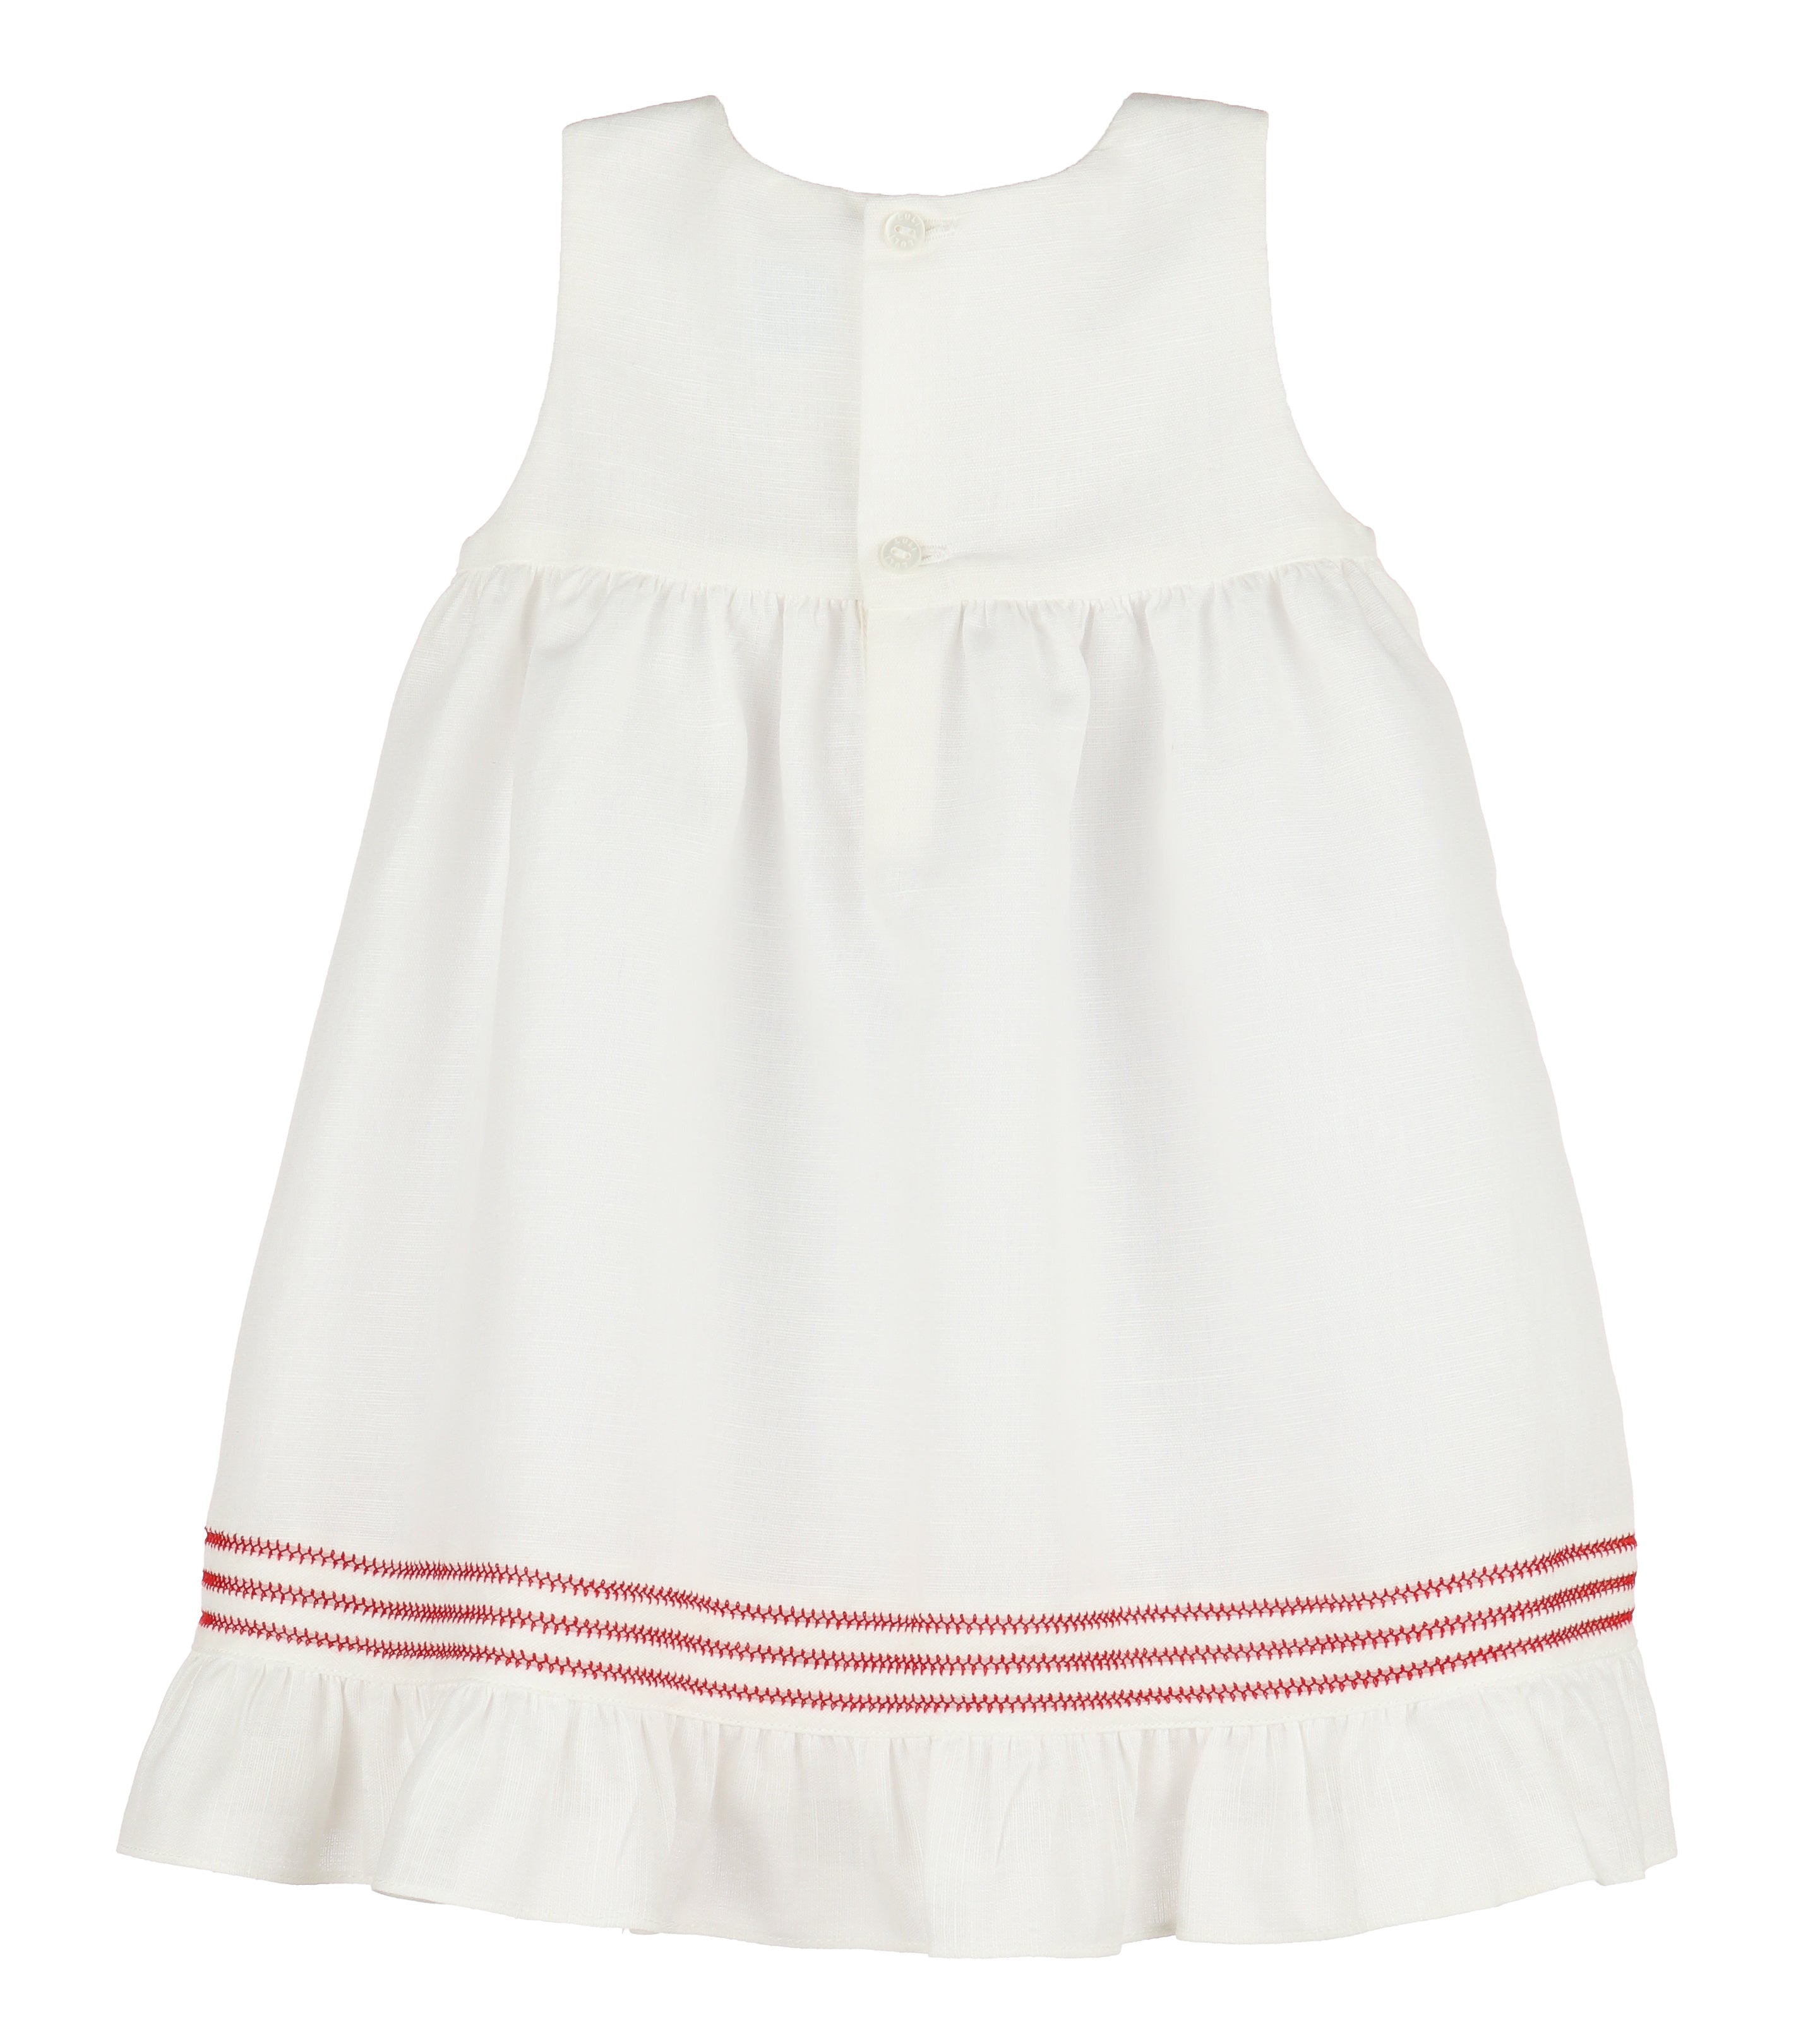 Infant & Toddler Randall Sailor Dress - Red